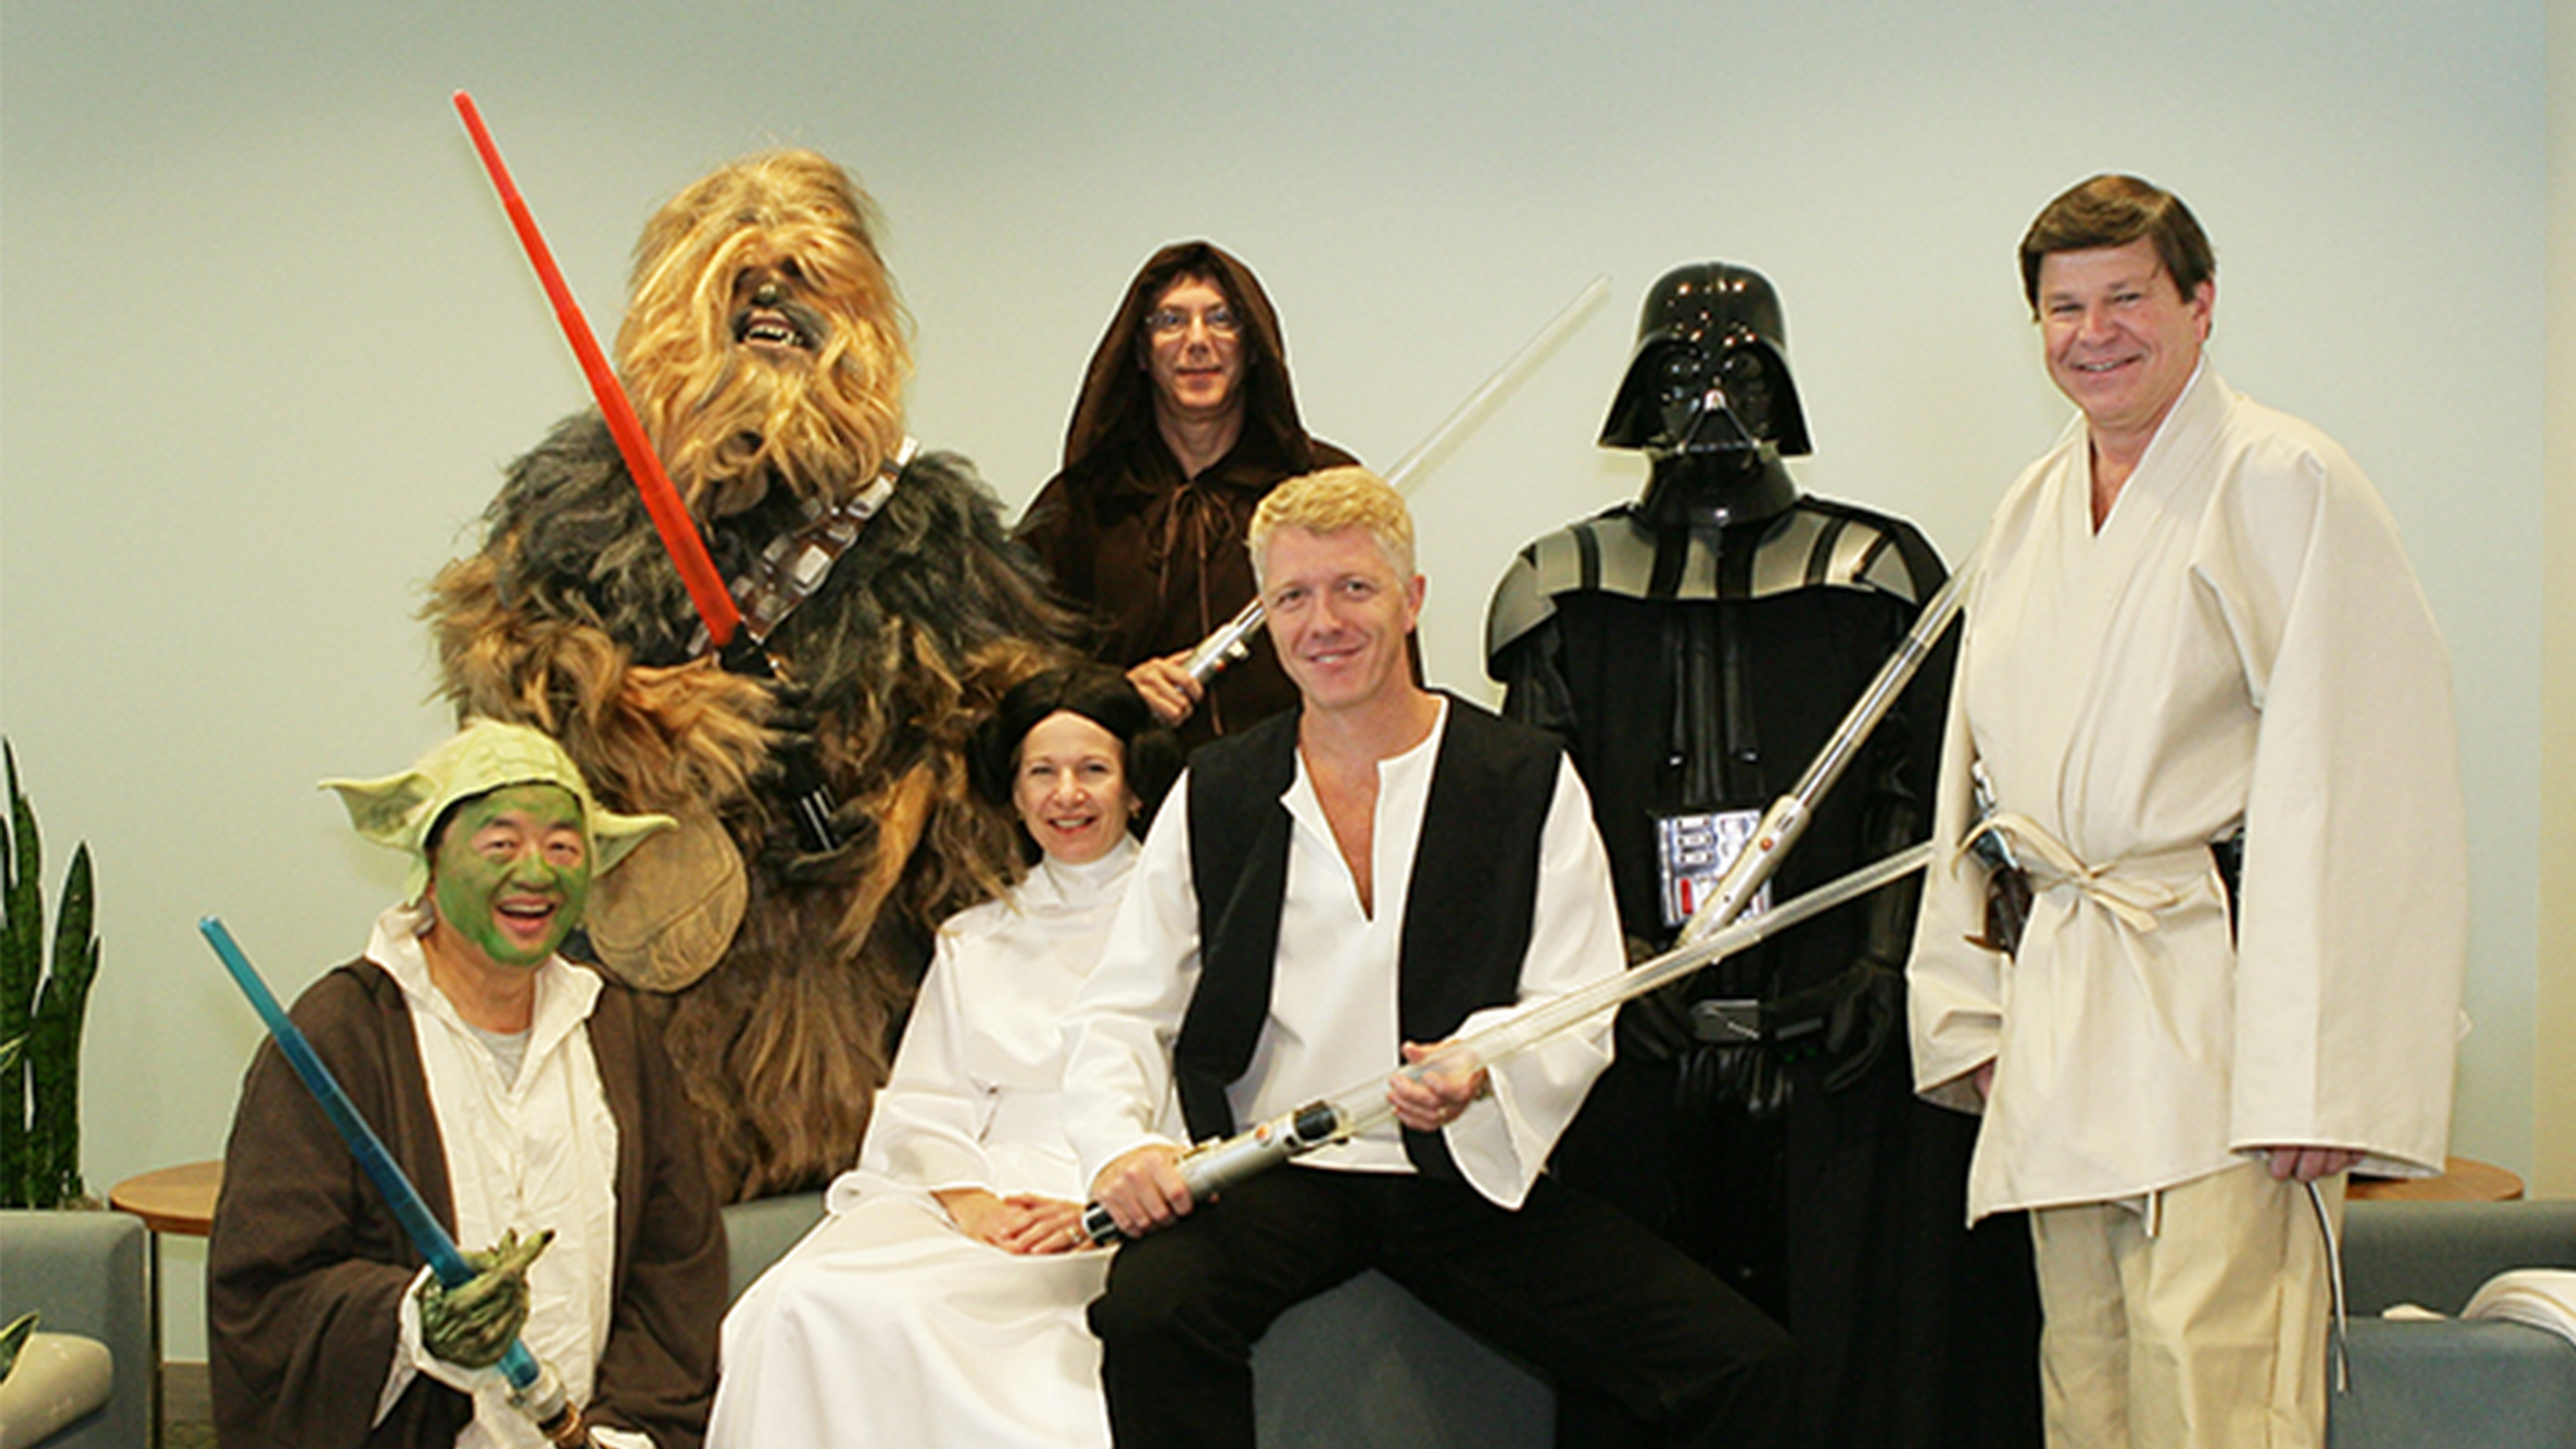 2006 Halloween photo of Executive Committee members. 